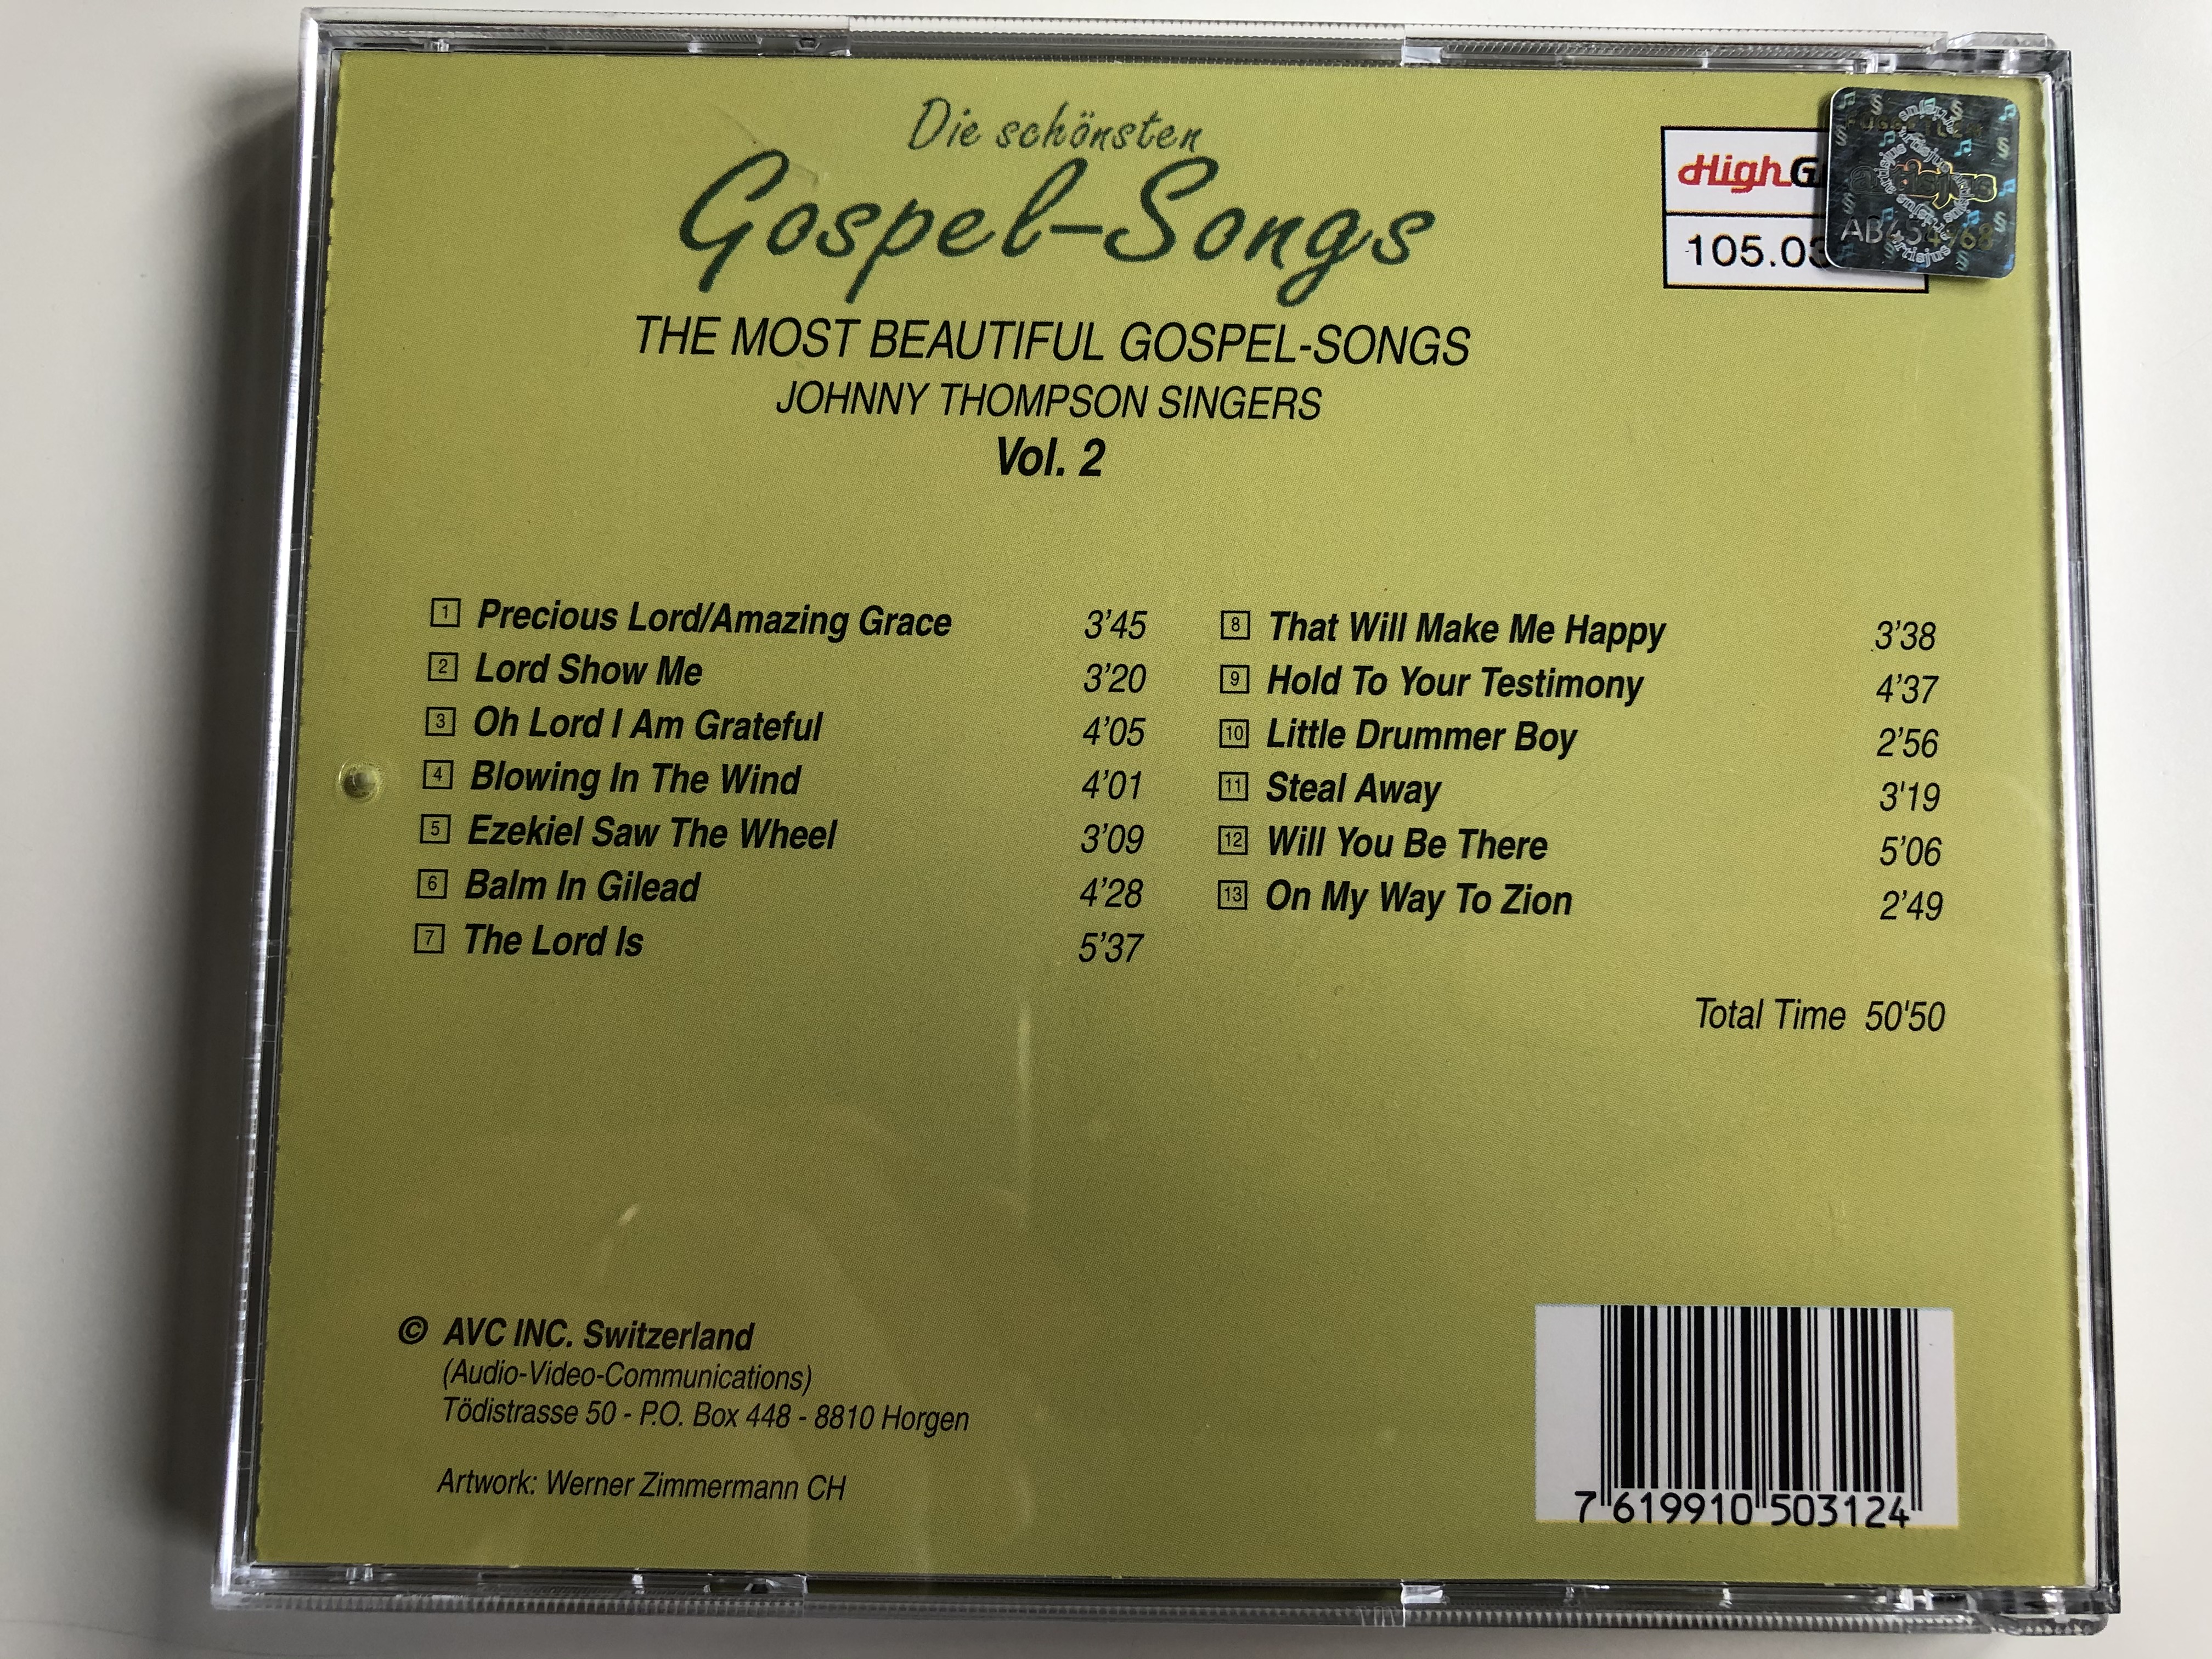 die-schonsten-gospel-songs-the-most-beautiful-gospel-songs-hand-in-hand-johnny-thompson-singers-high-grade-3x-audio-cd-105-9-.jpg